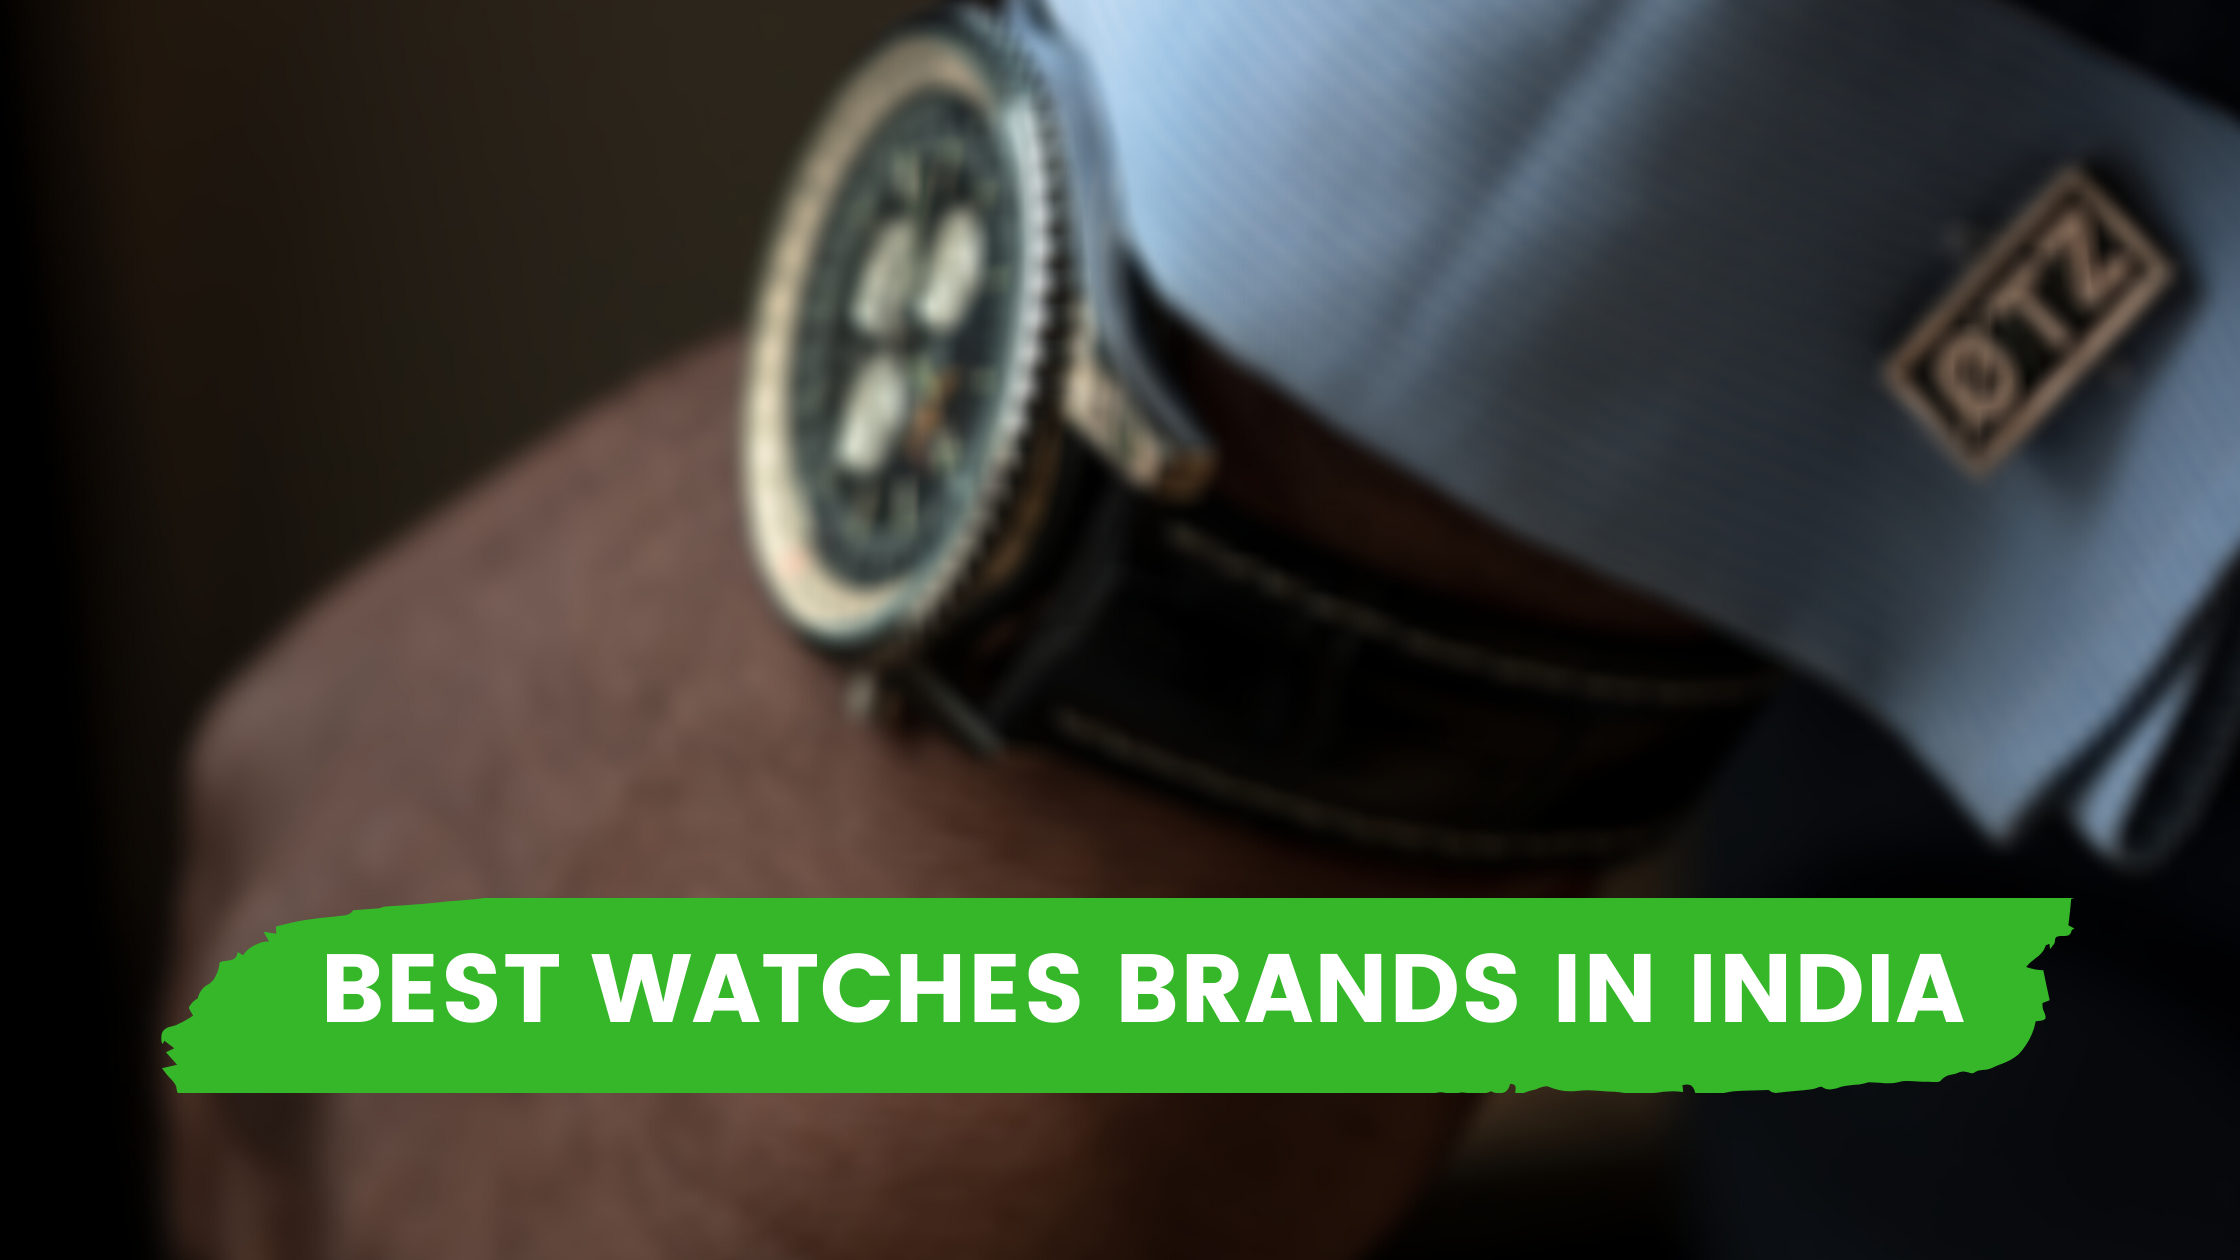 Top 5 Best Watches Brands in India 2020